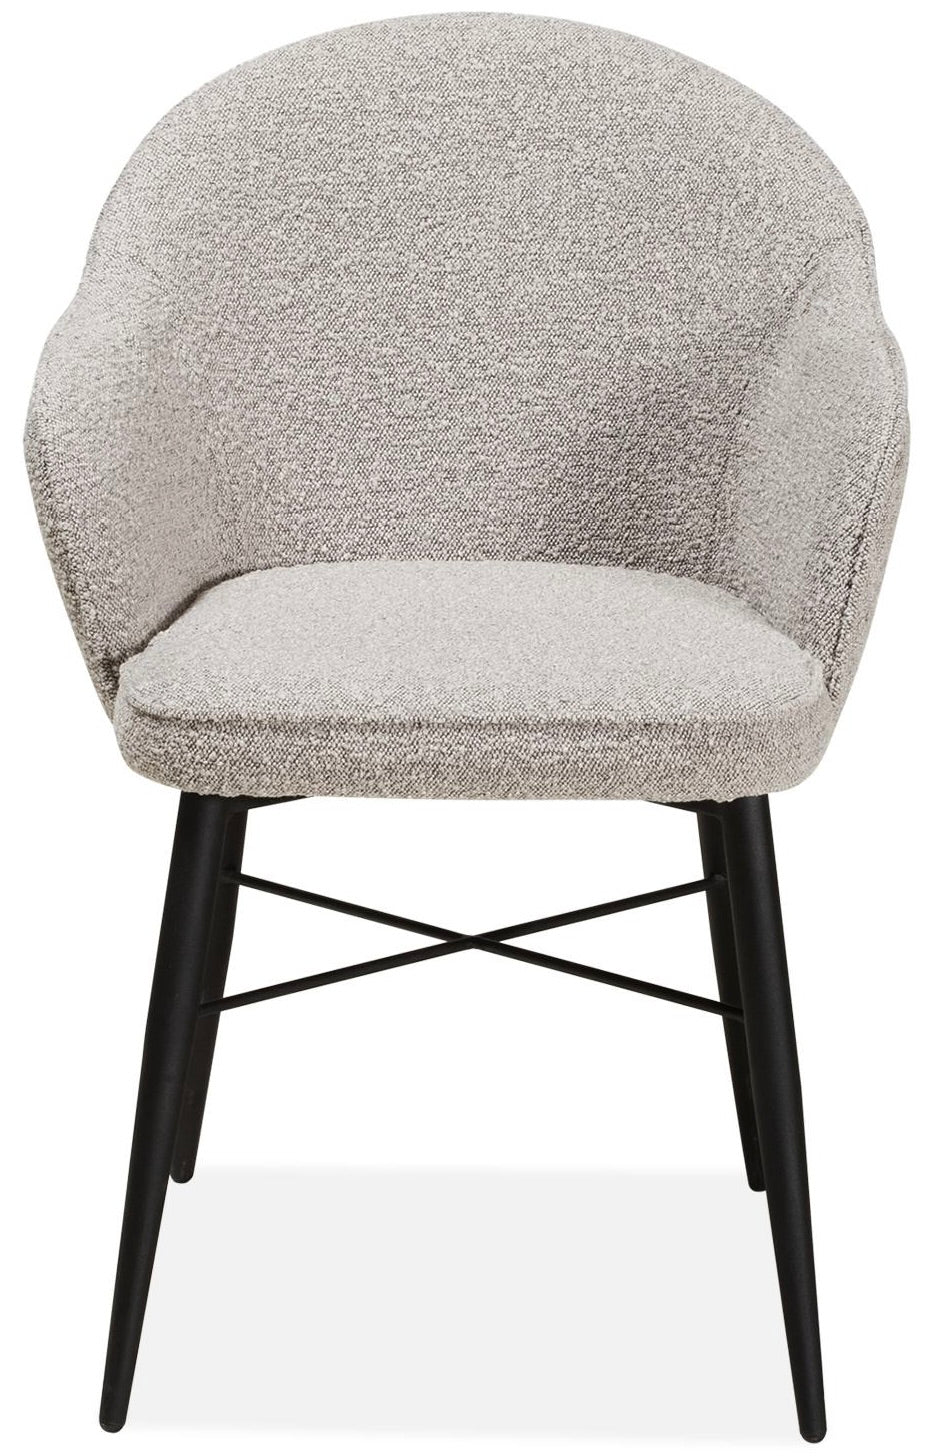 Armlehnen Stuhl Billy Teddy Stoff in 3 Farben weiß hellgrau anthrazit-grau